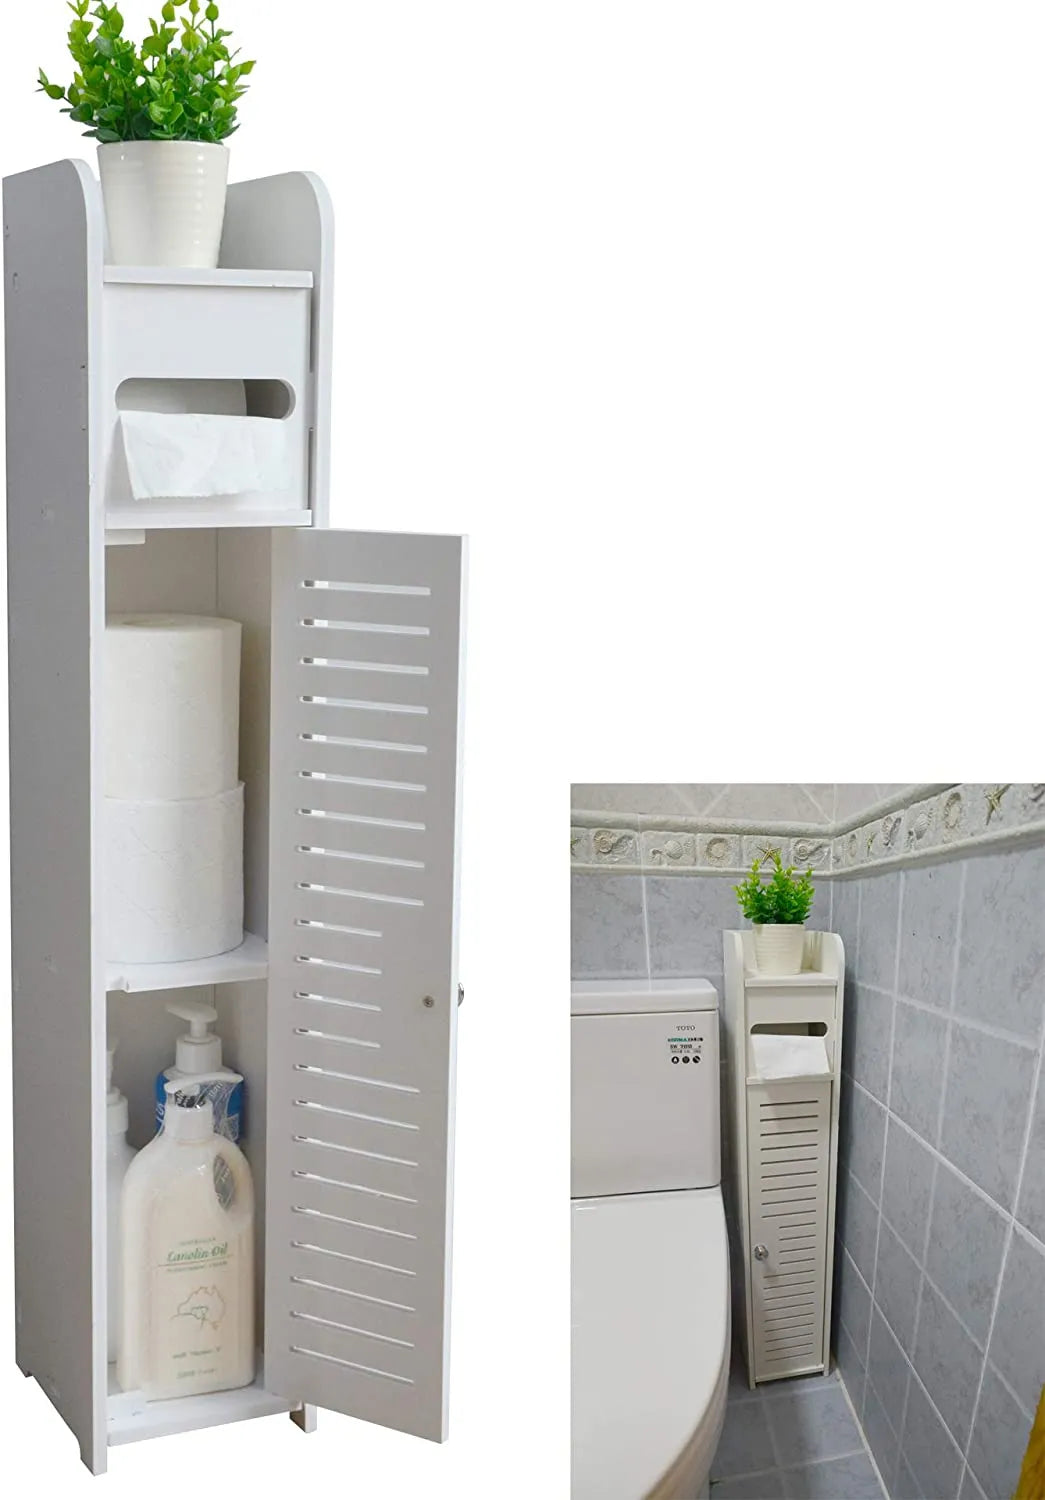 BluesdeSmall Bathroom Corner Floor Cabinet Toilet Vanity Cabinet Narrow Bath Sink Organizer Towel Storage Shelf for Paper Holder